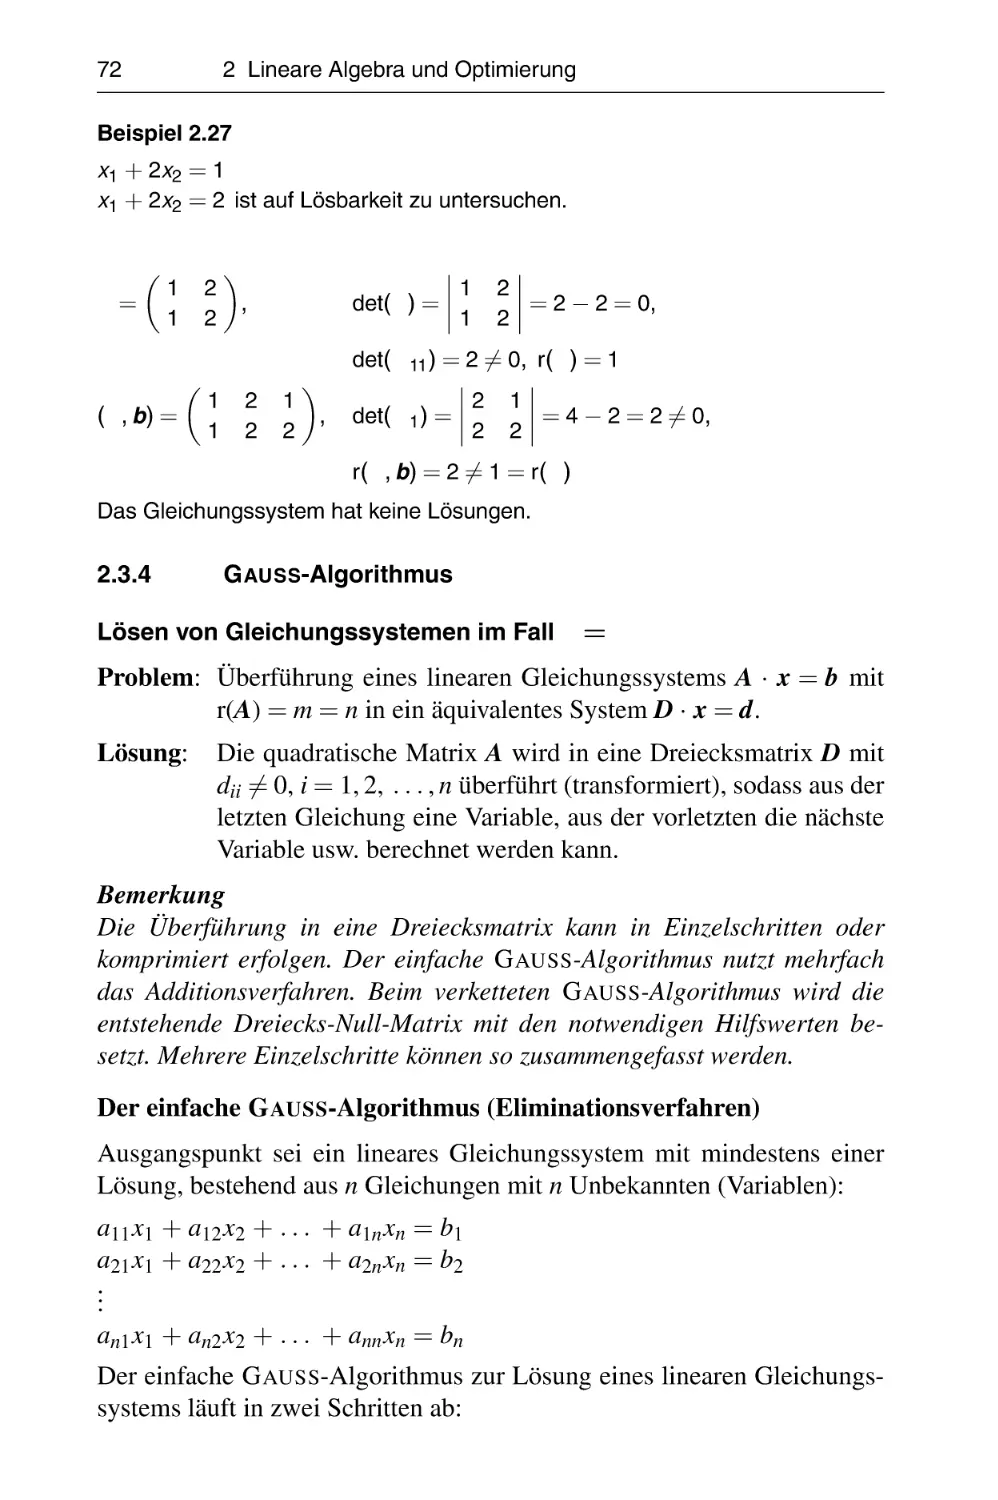 2.3.4 Gauss-Algorithmus